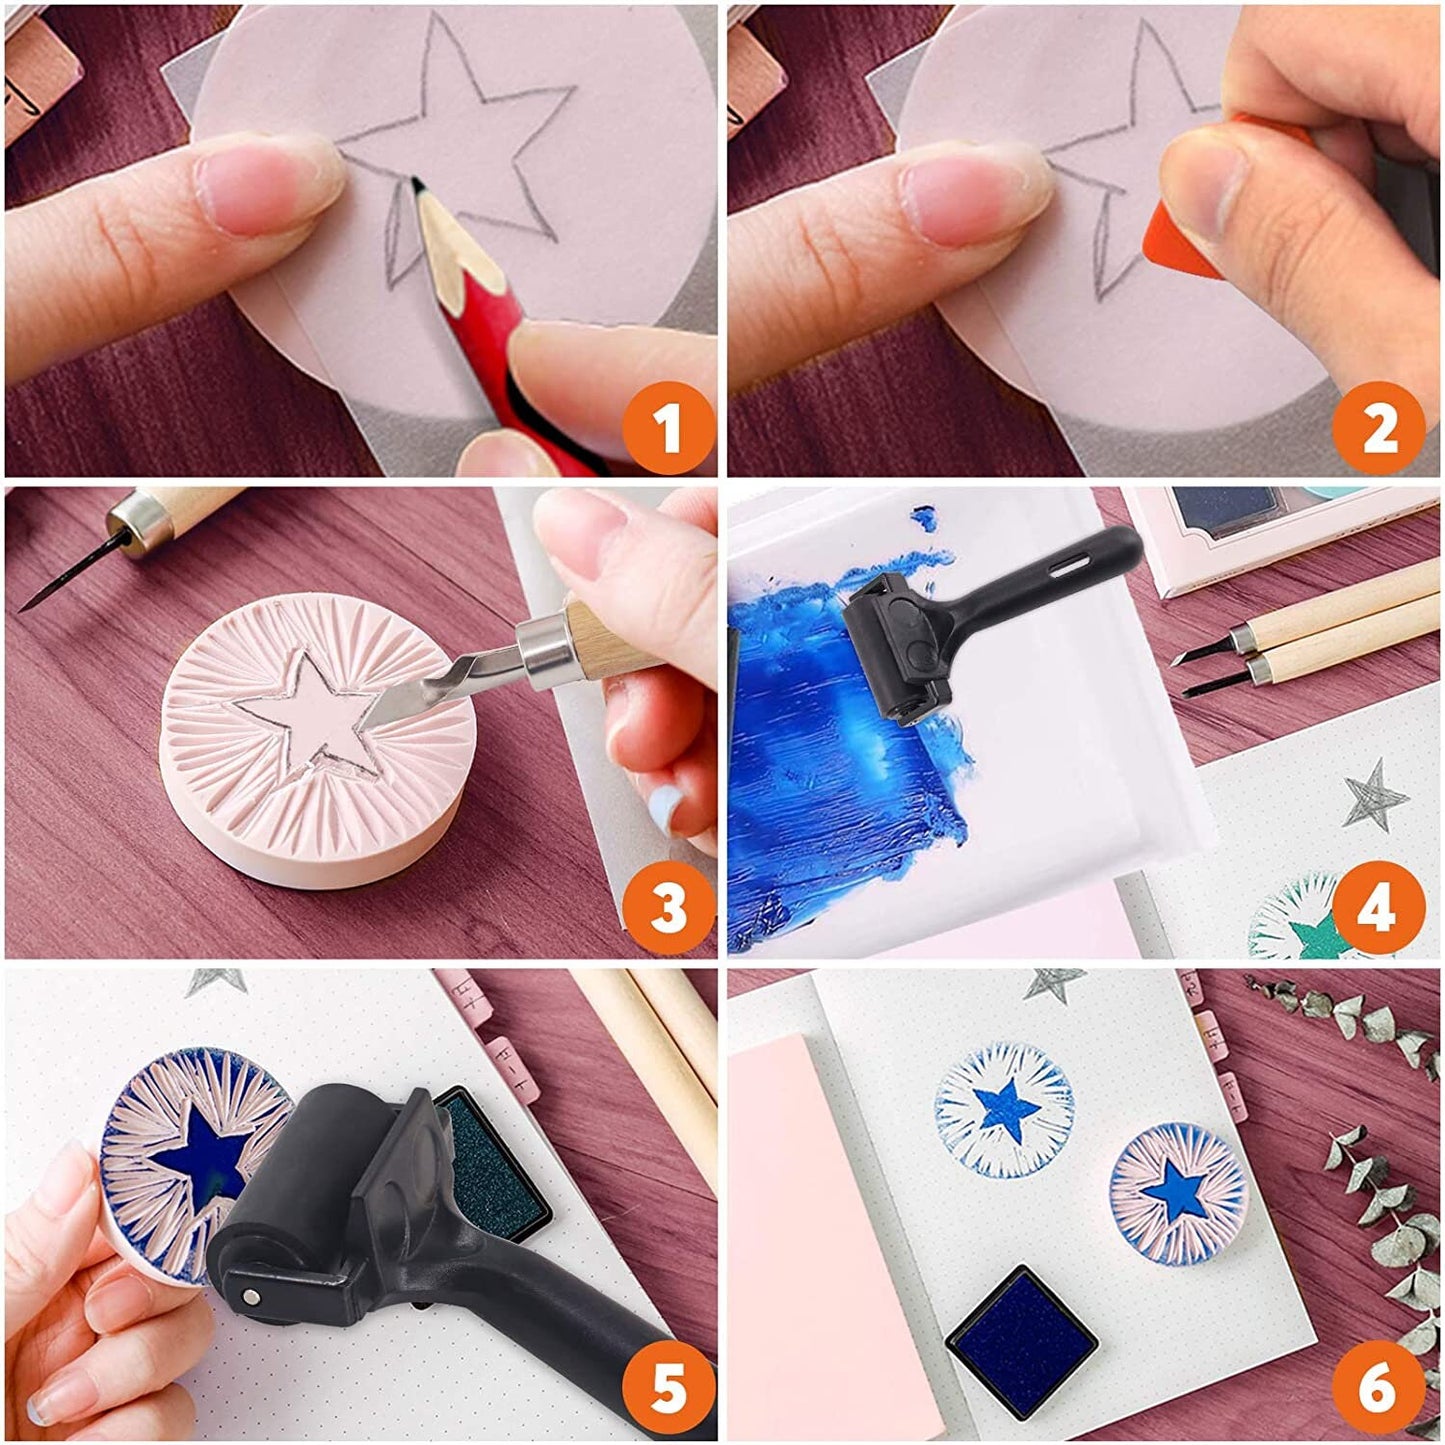 Rubber Stamp Making Kit with Stamp Blocks and Tools - Printmaking Kit -